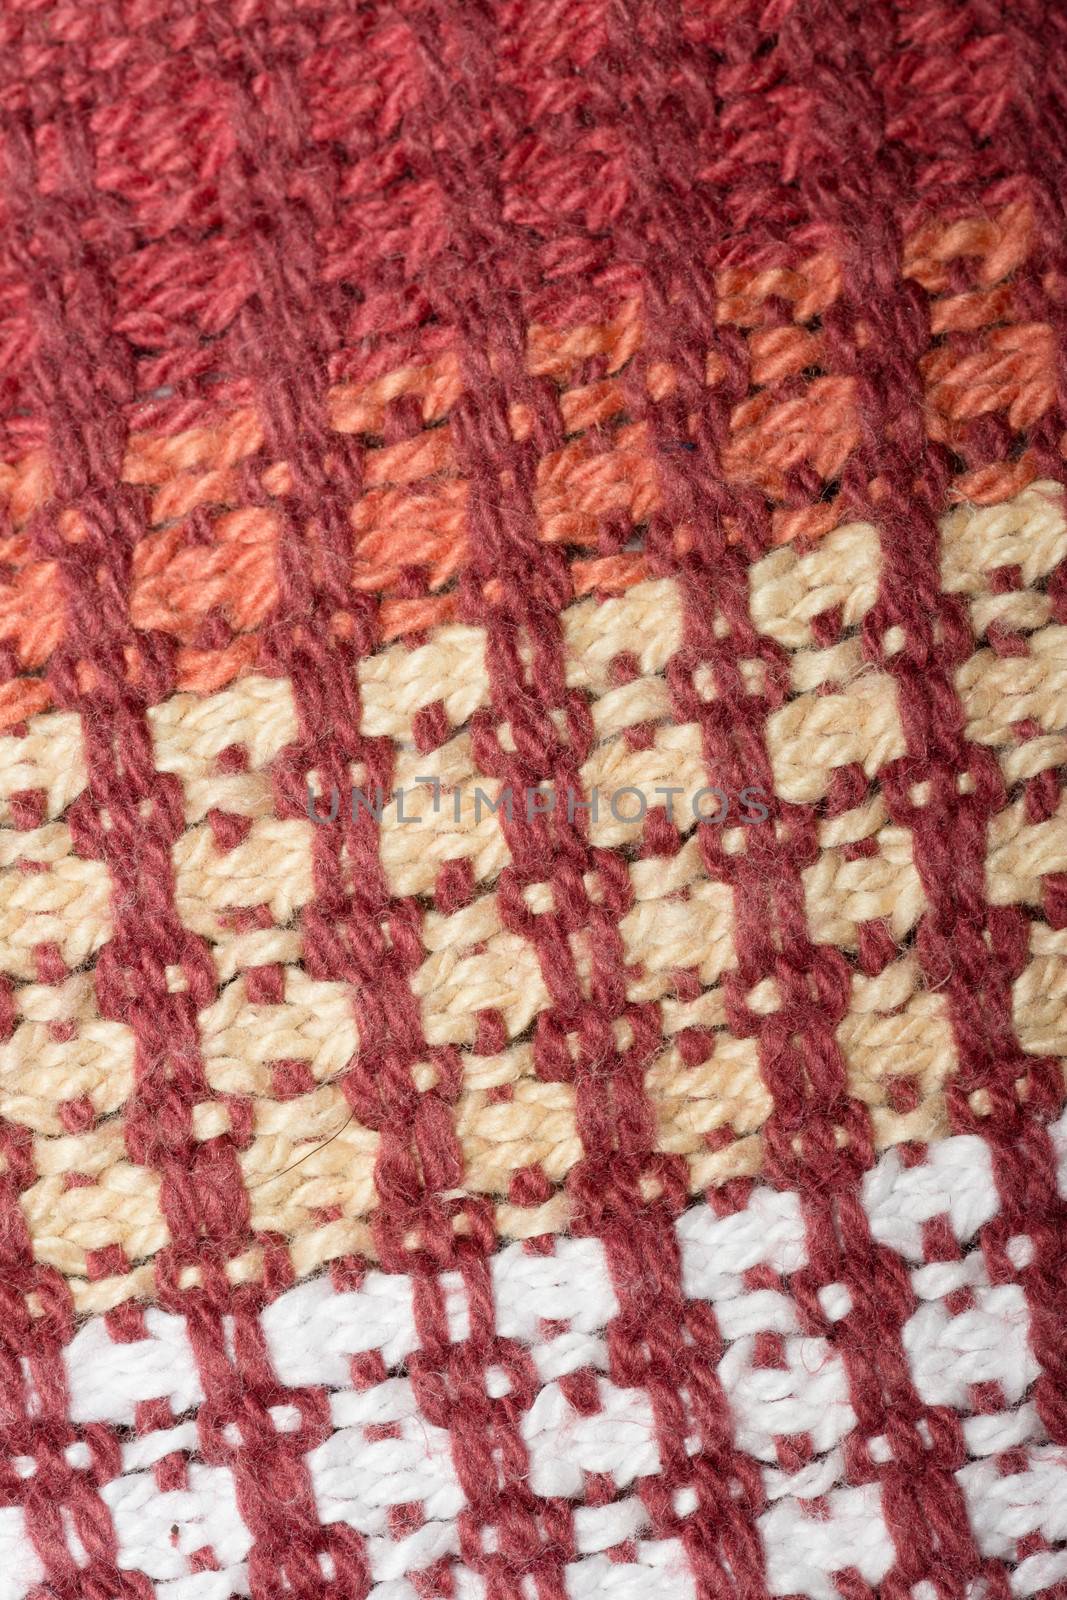 Knitted wool close-up by elwynn